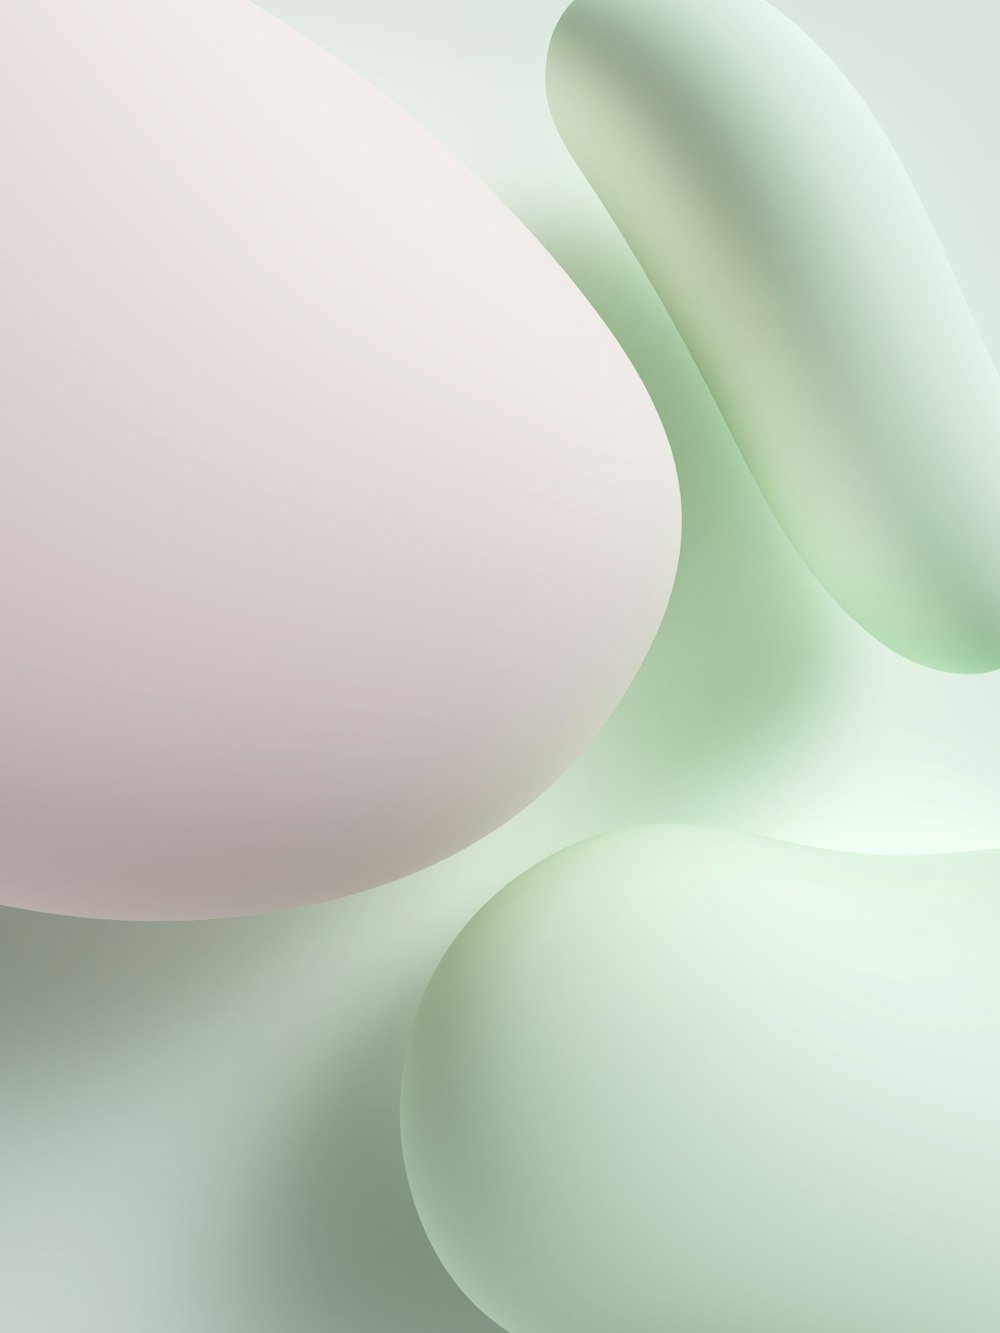 Un primer plano de un objeto blanco con un fondo verde claro